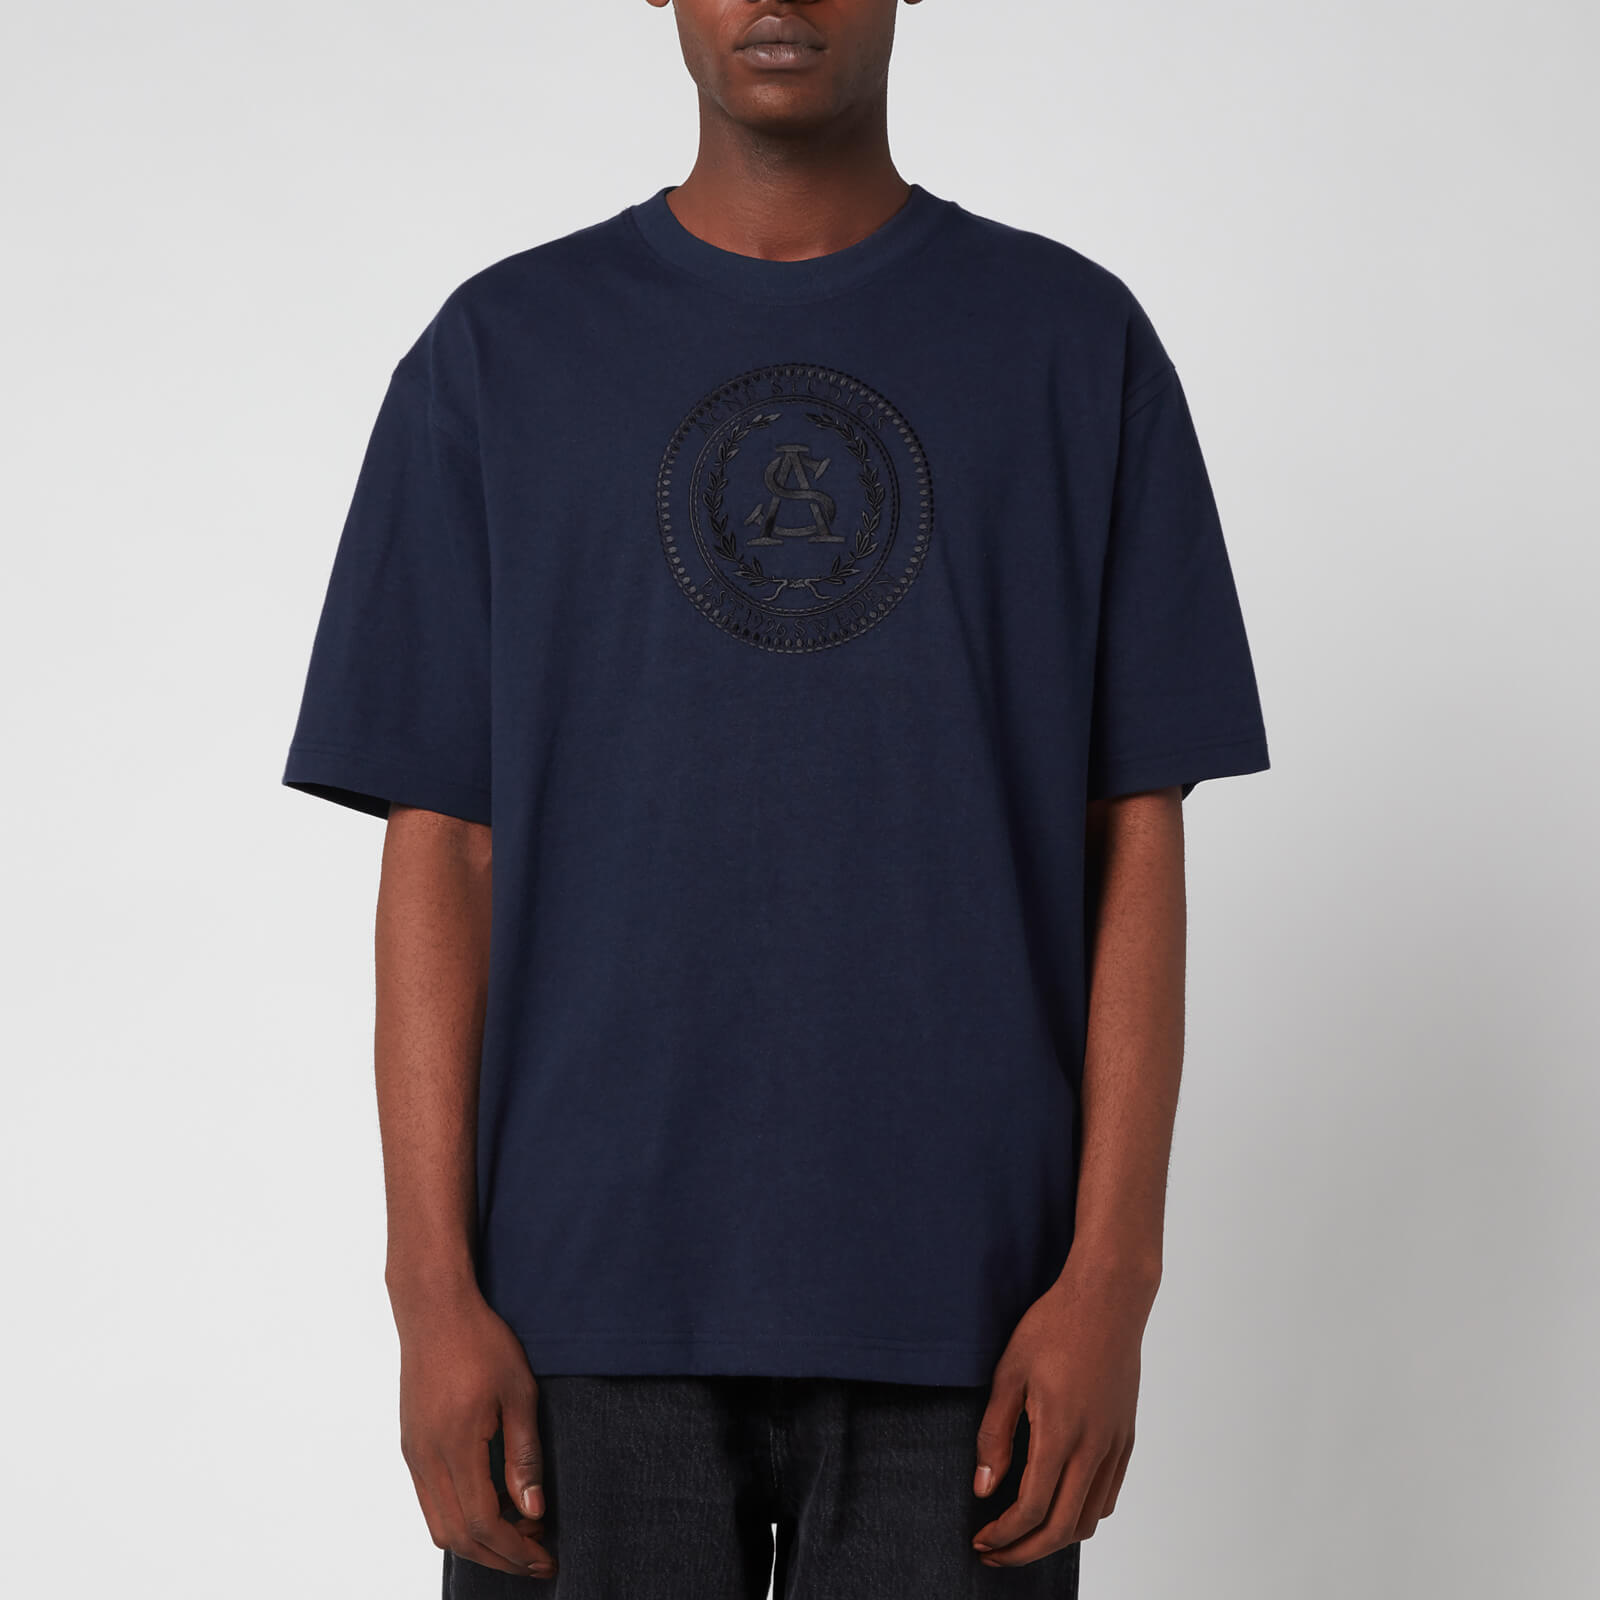 Acne Studios Men's Embroidered Logo T-Shirt - Navy - S